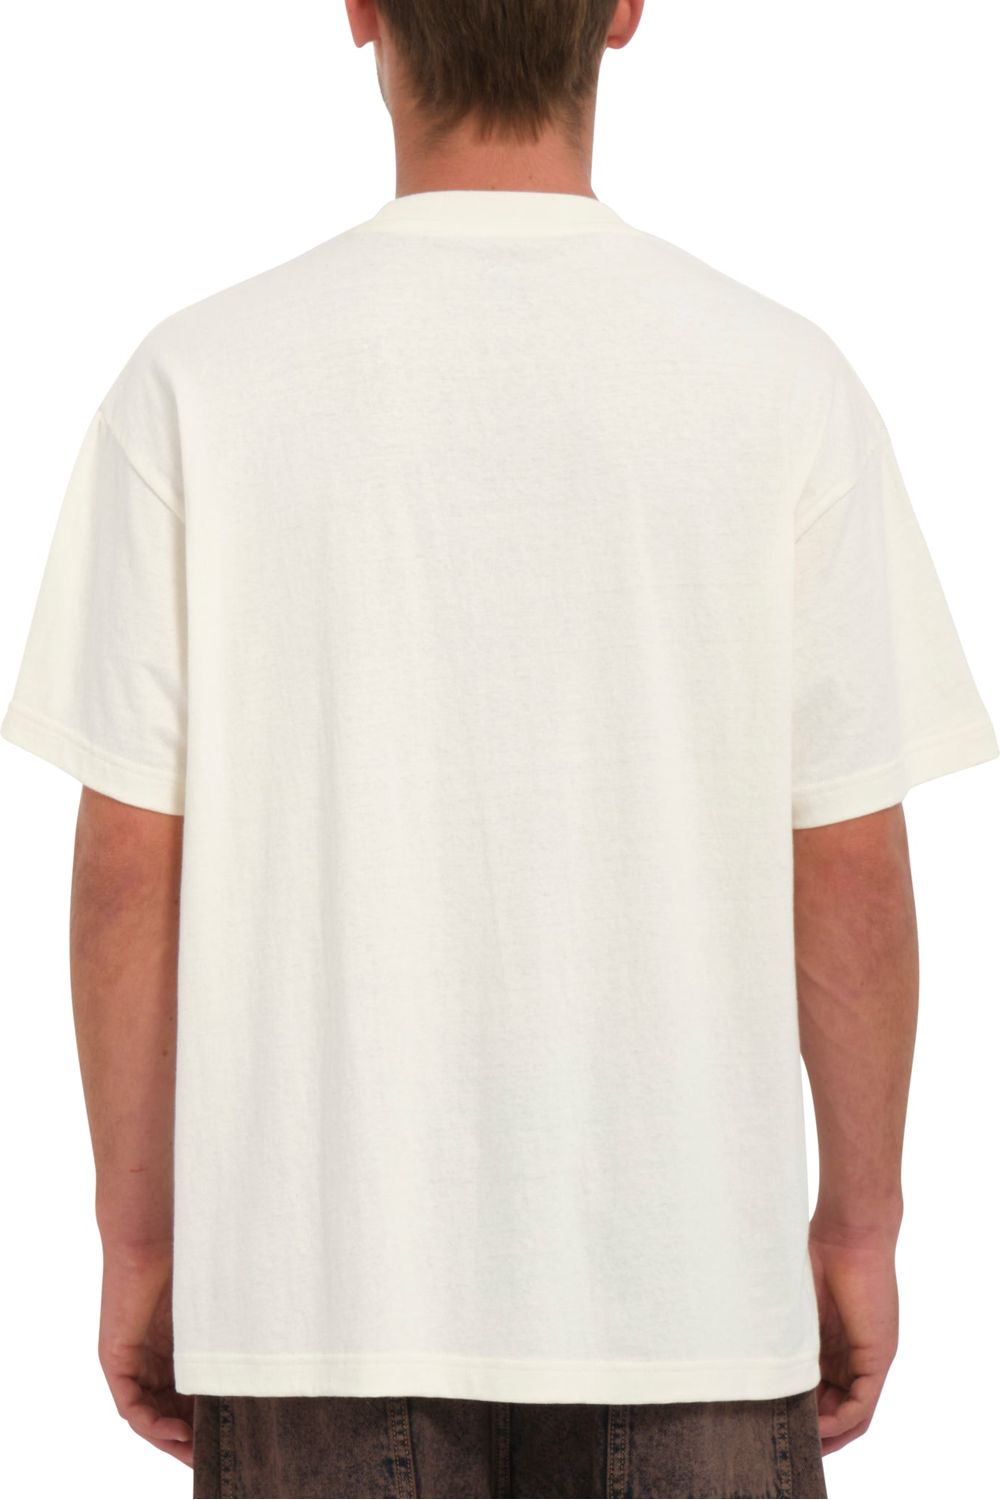 Volcom Tomstone Lse Short Sleeve T-Shirt Dirty White